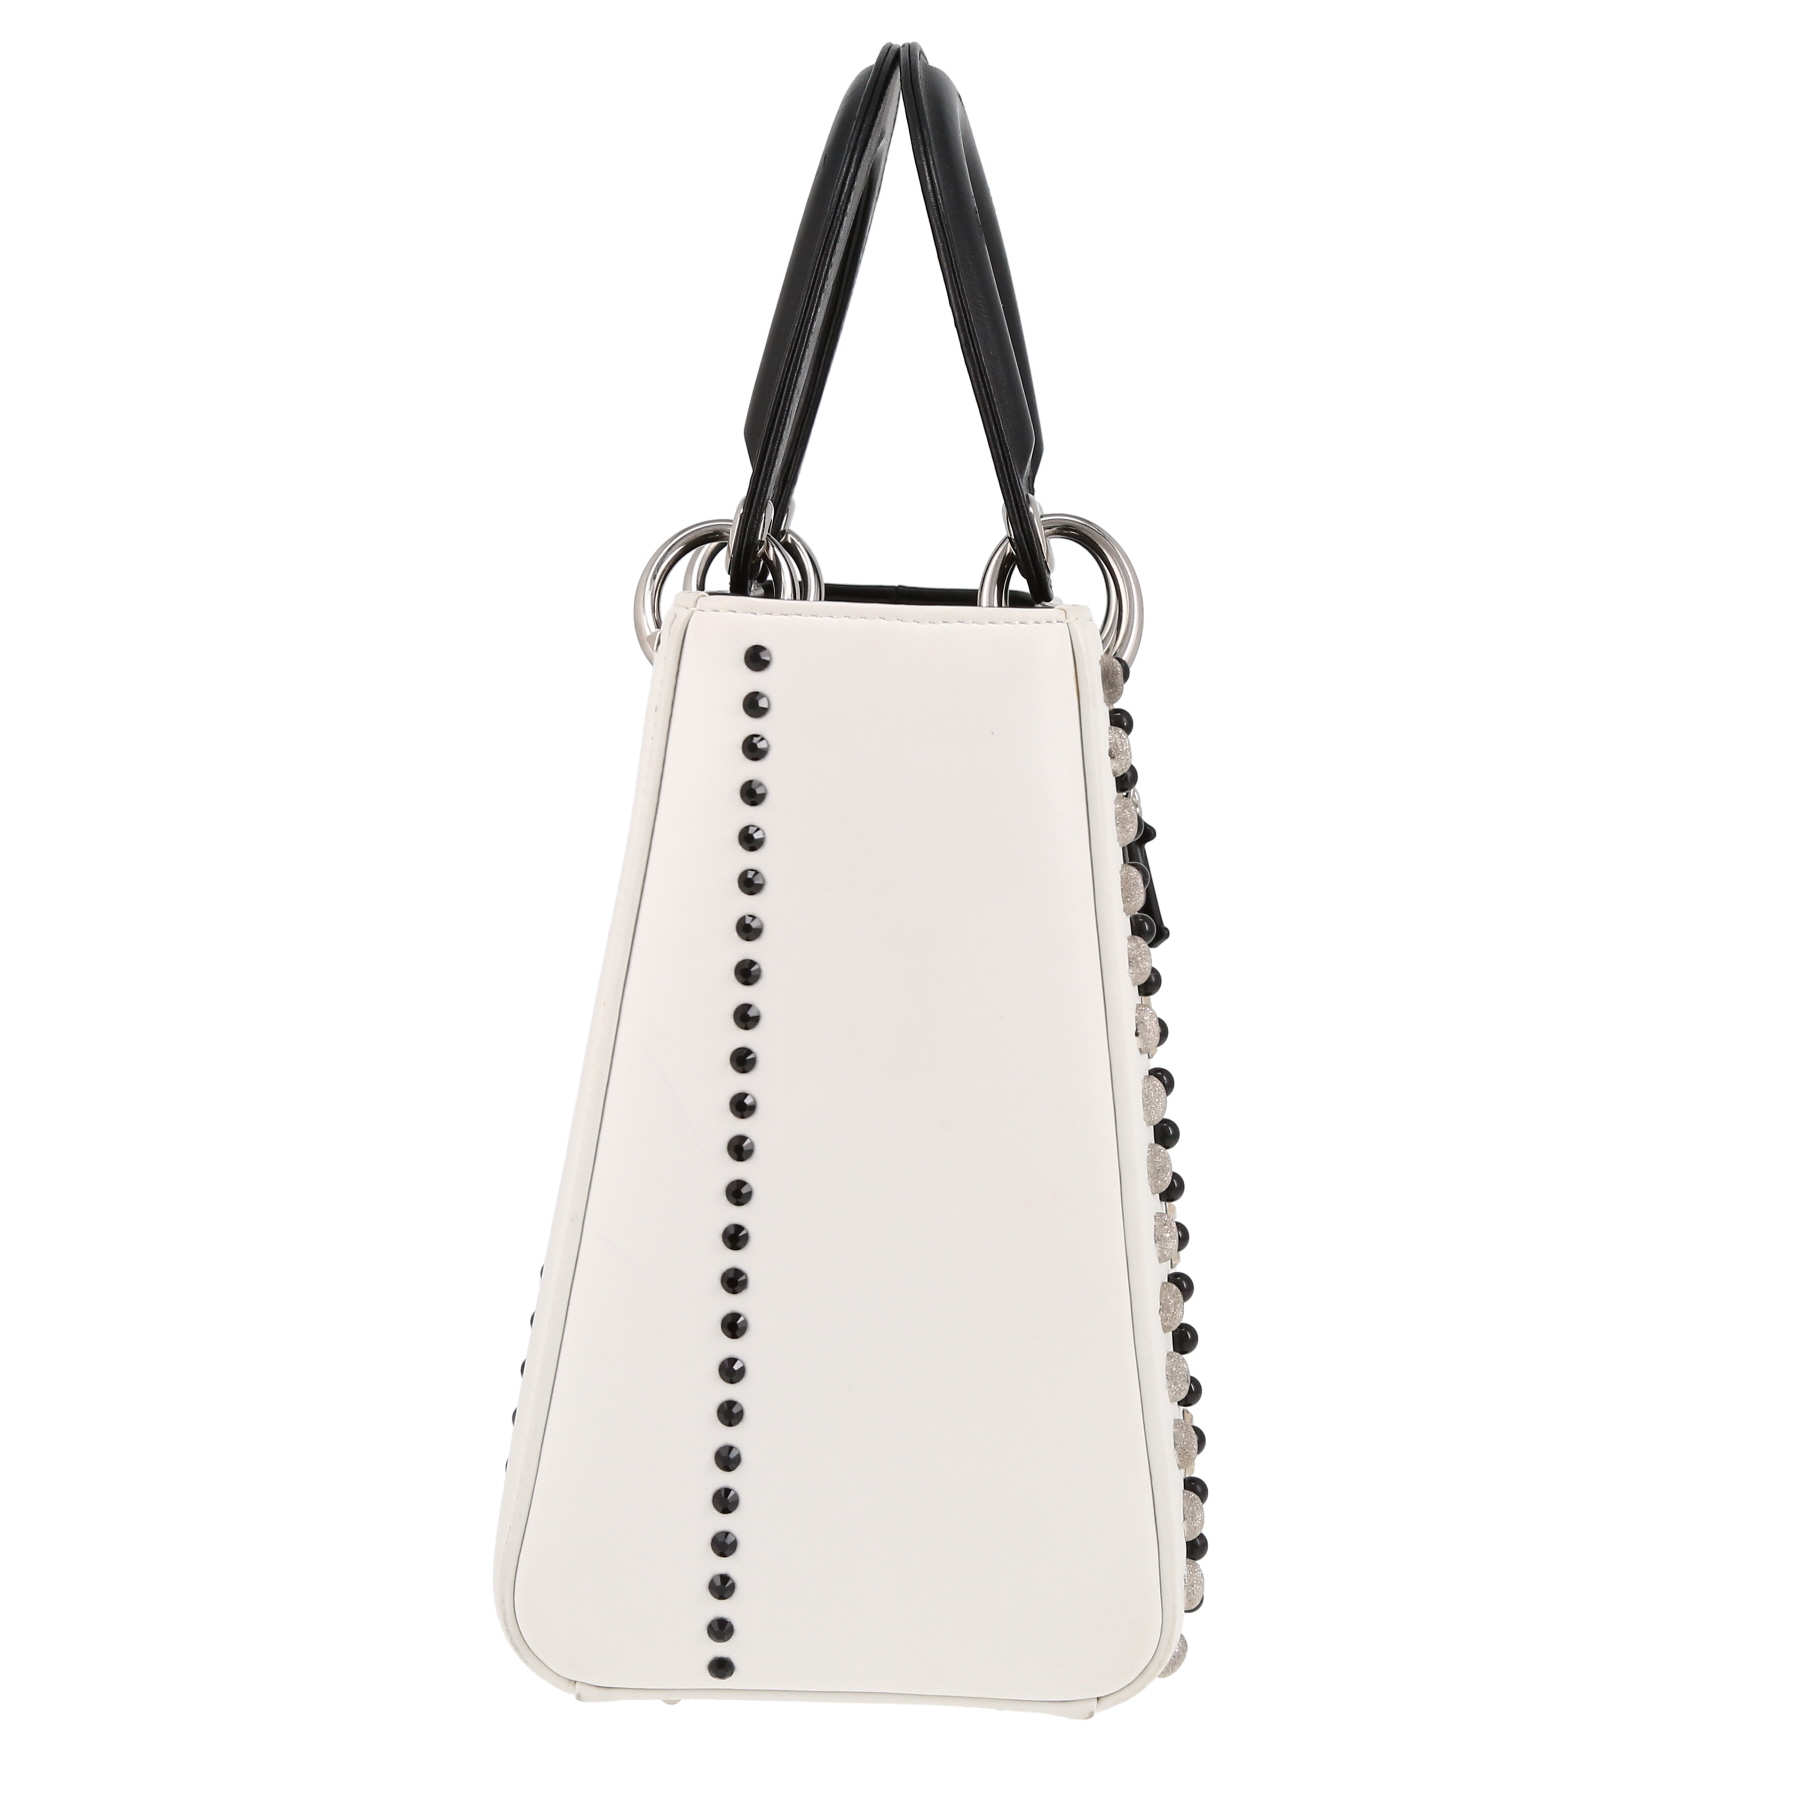 Lady Dior Handbag In White Leather